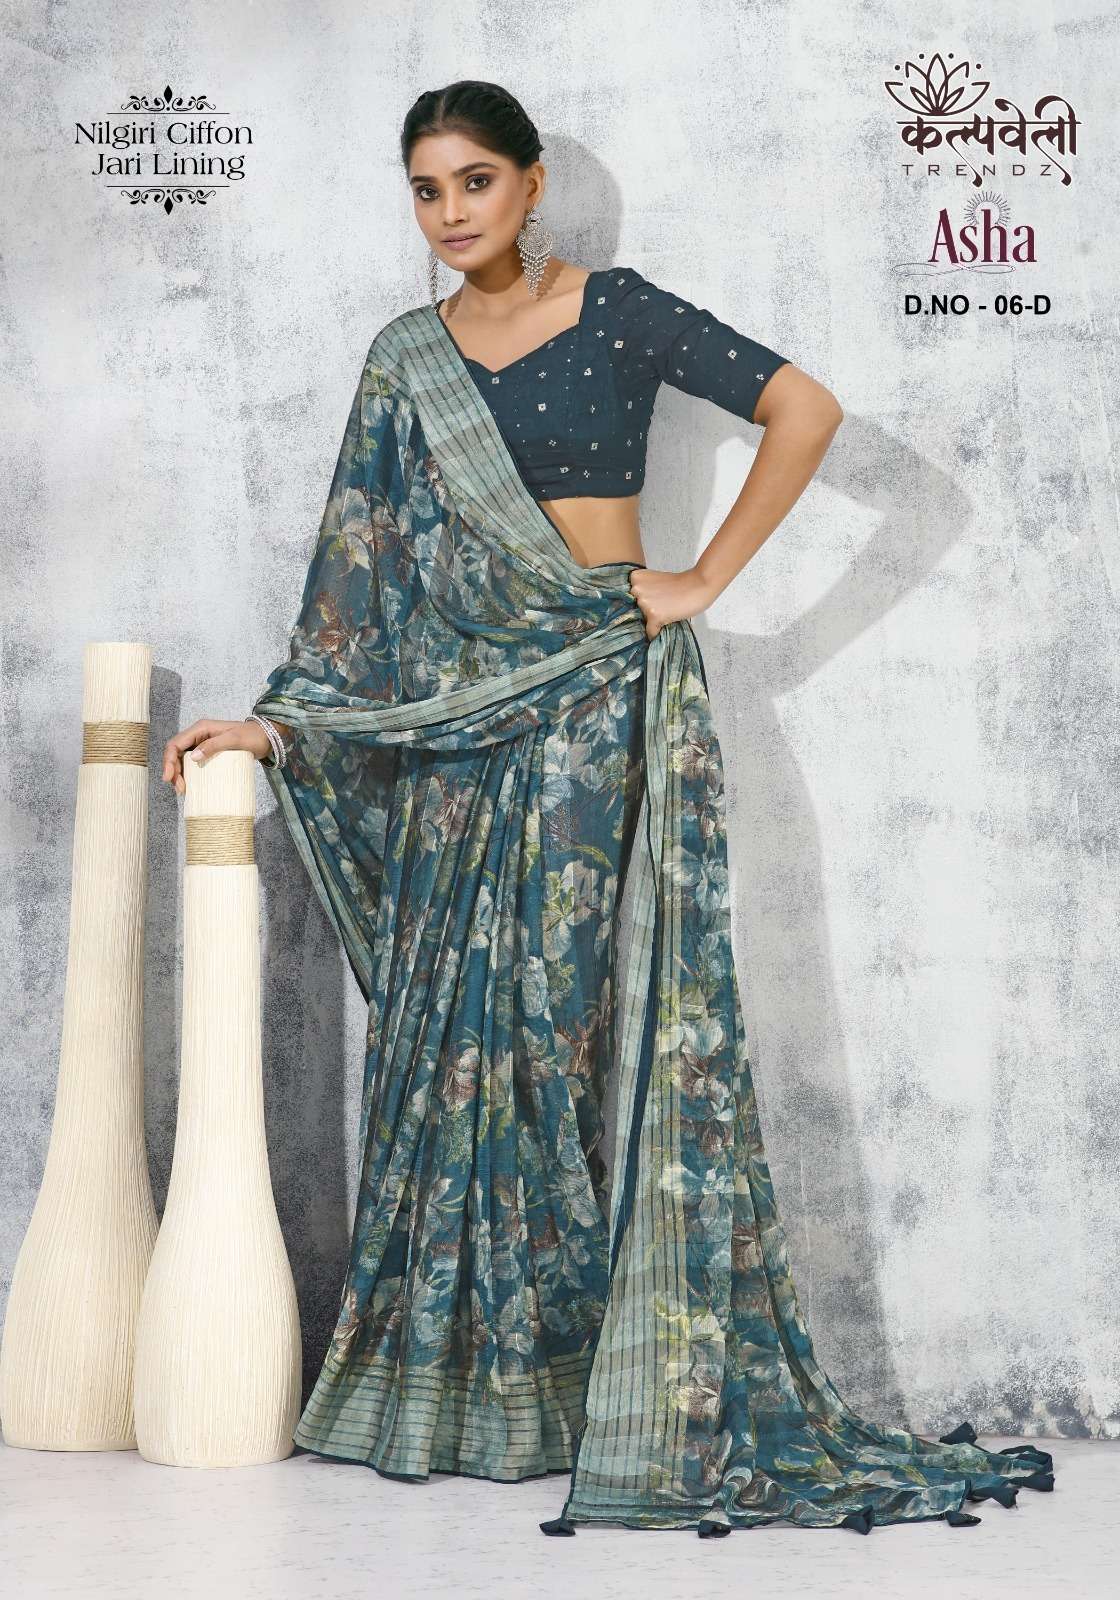 kalpavelly trendz asha 6 fancy flower print casual sarees supplier